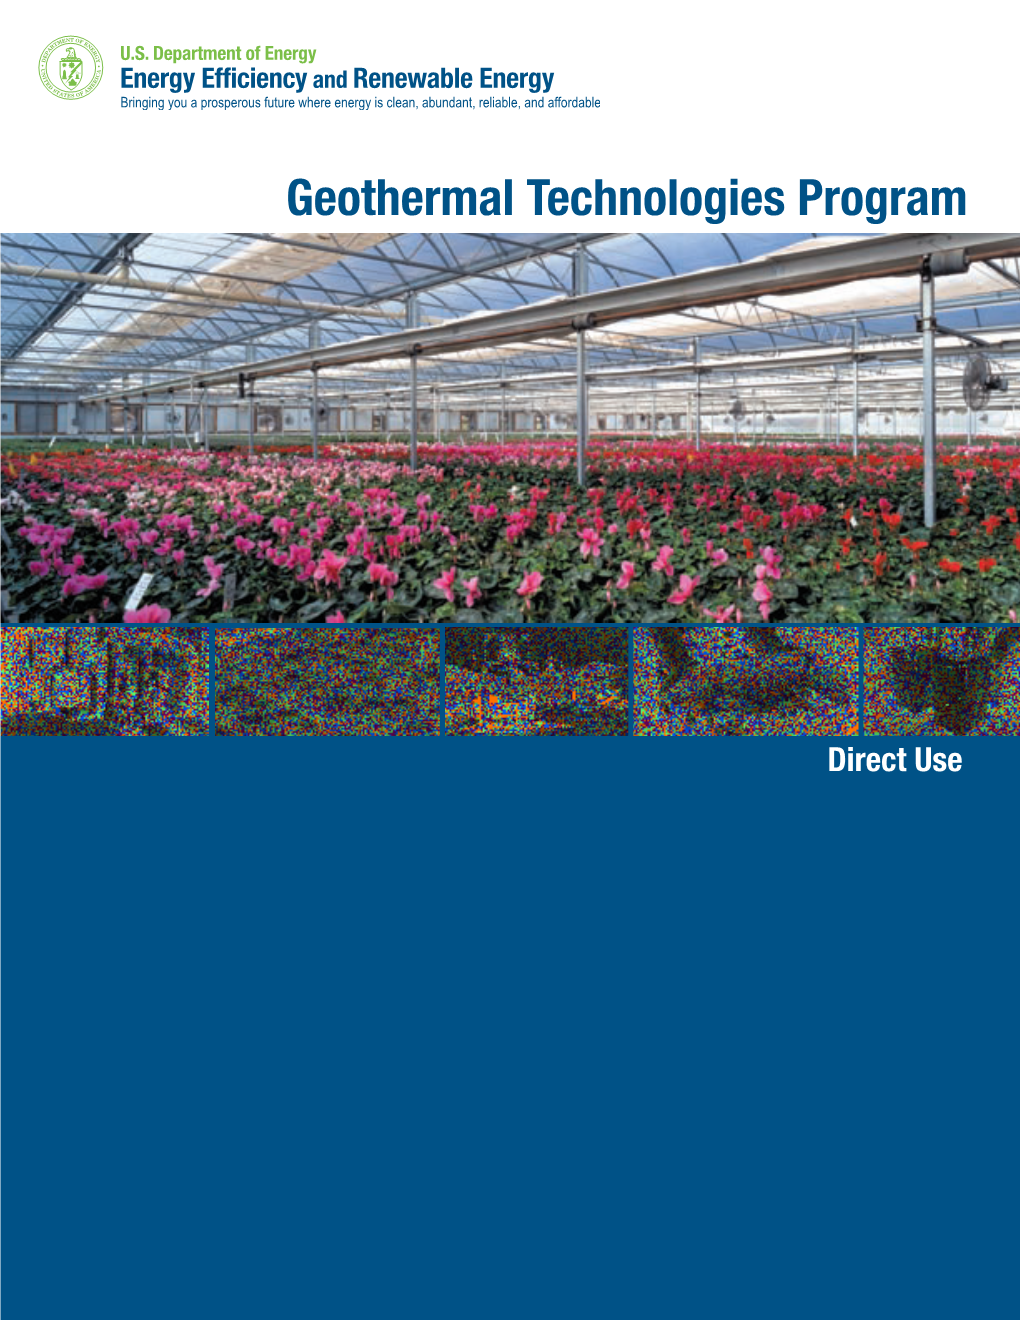 Geothermal Technologies Program: Direct